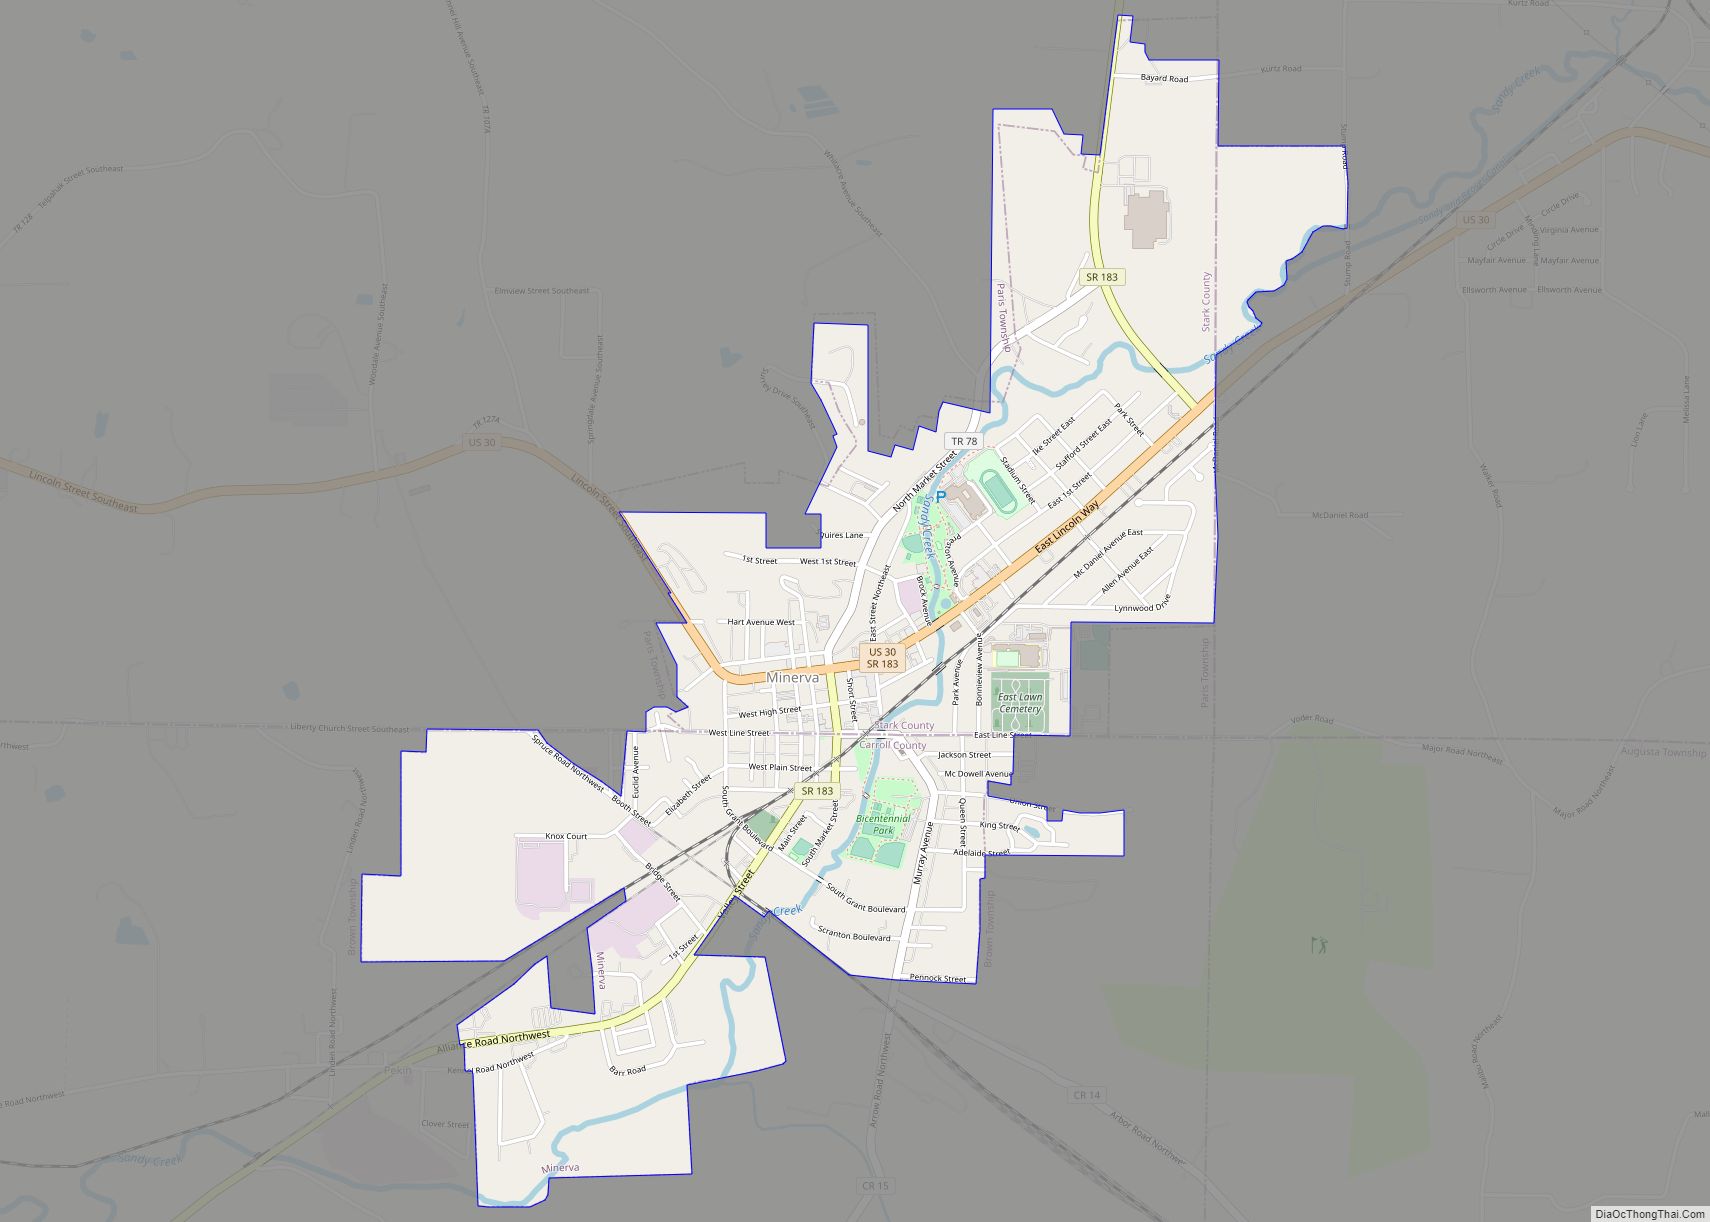 Map of Minerva village